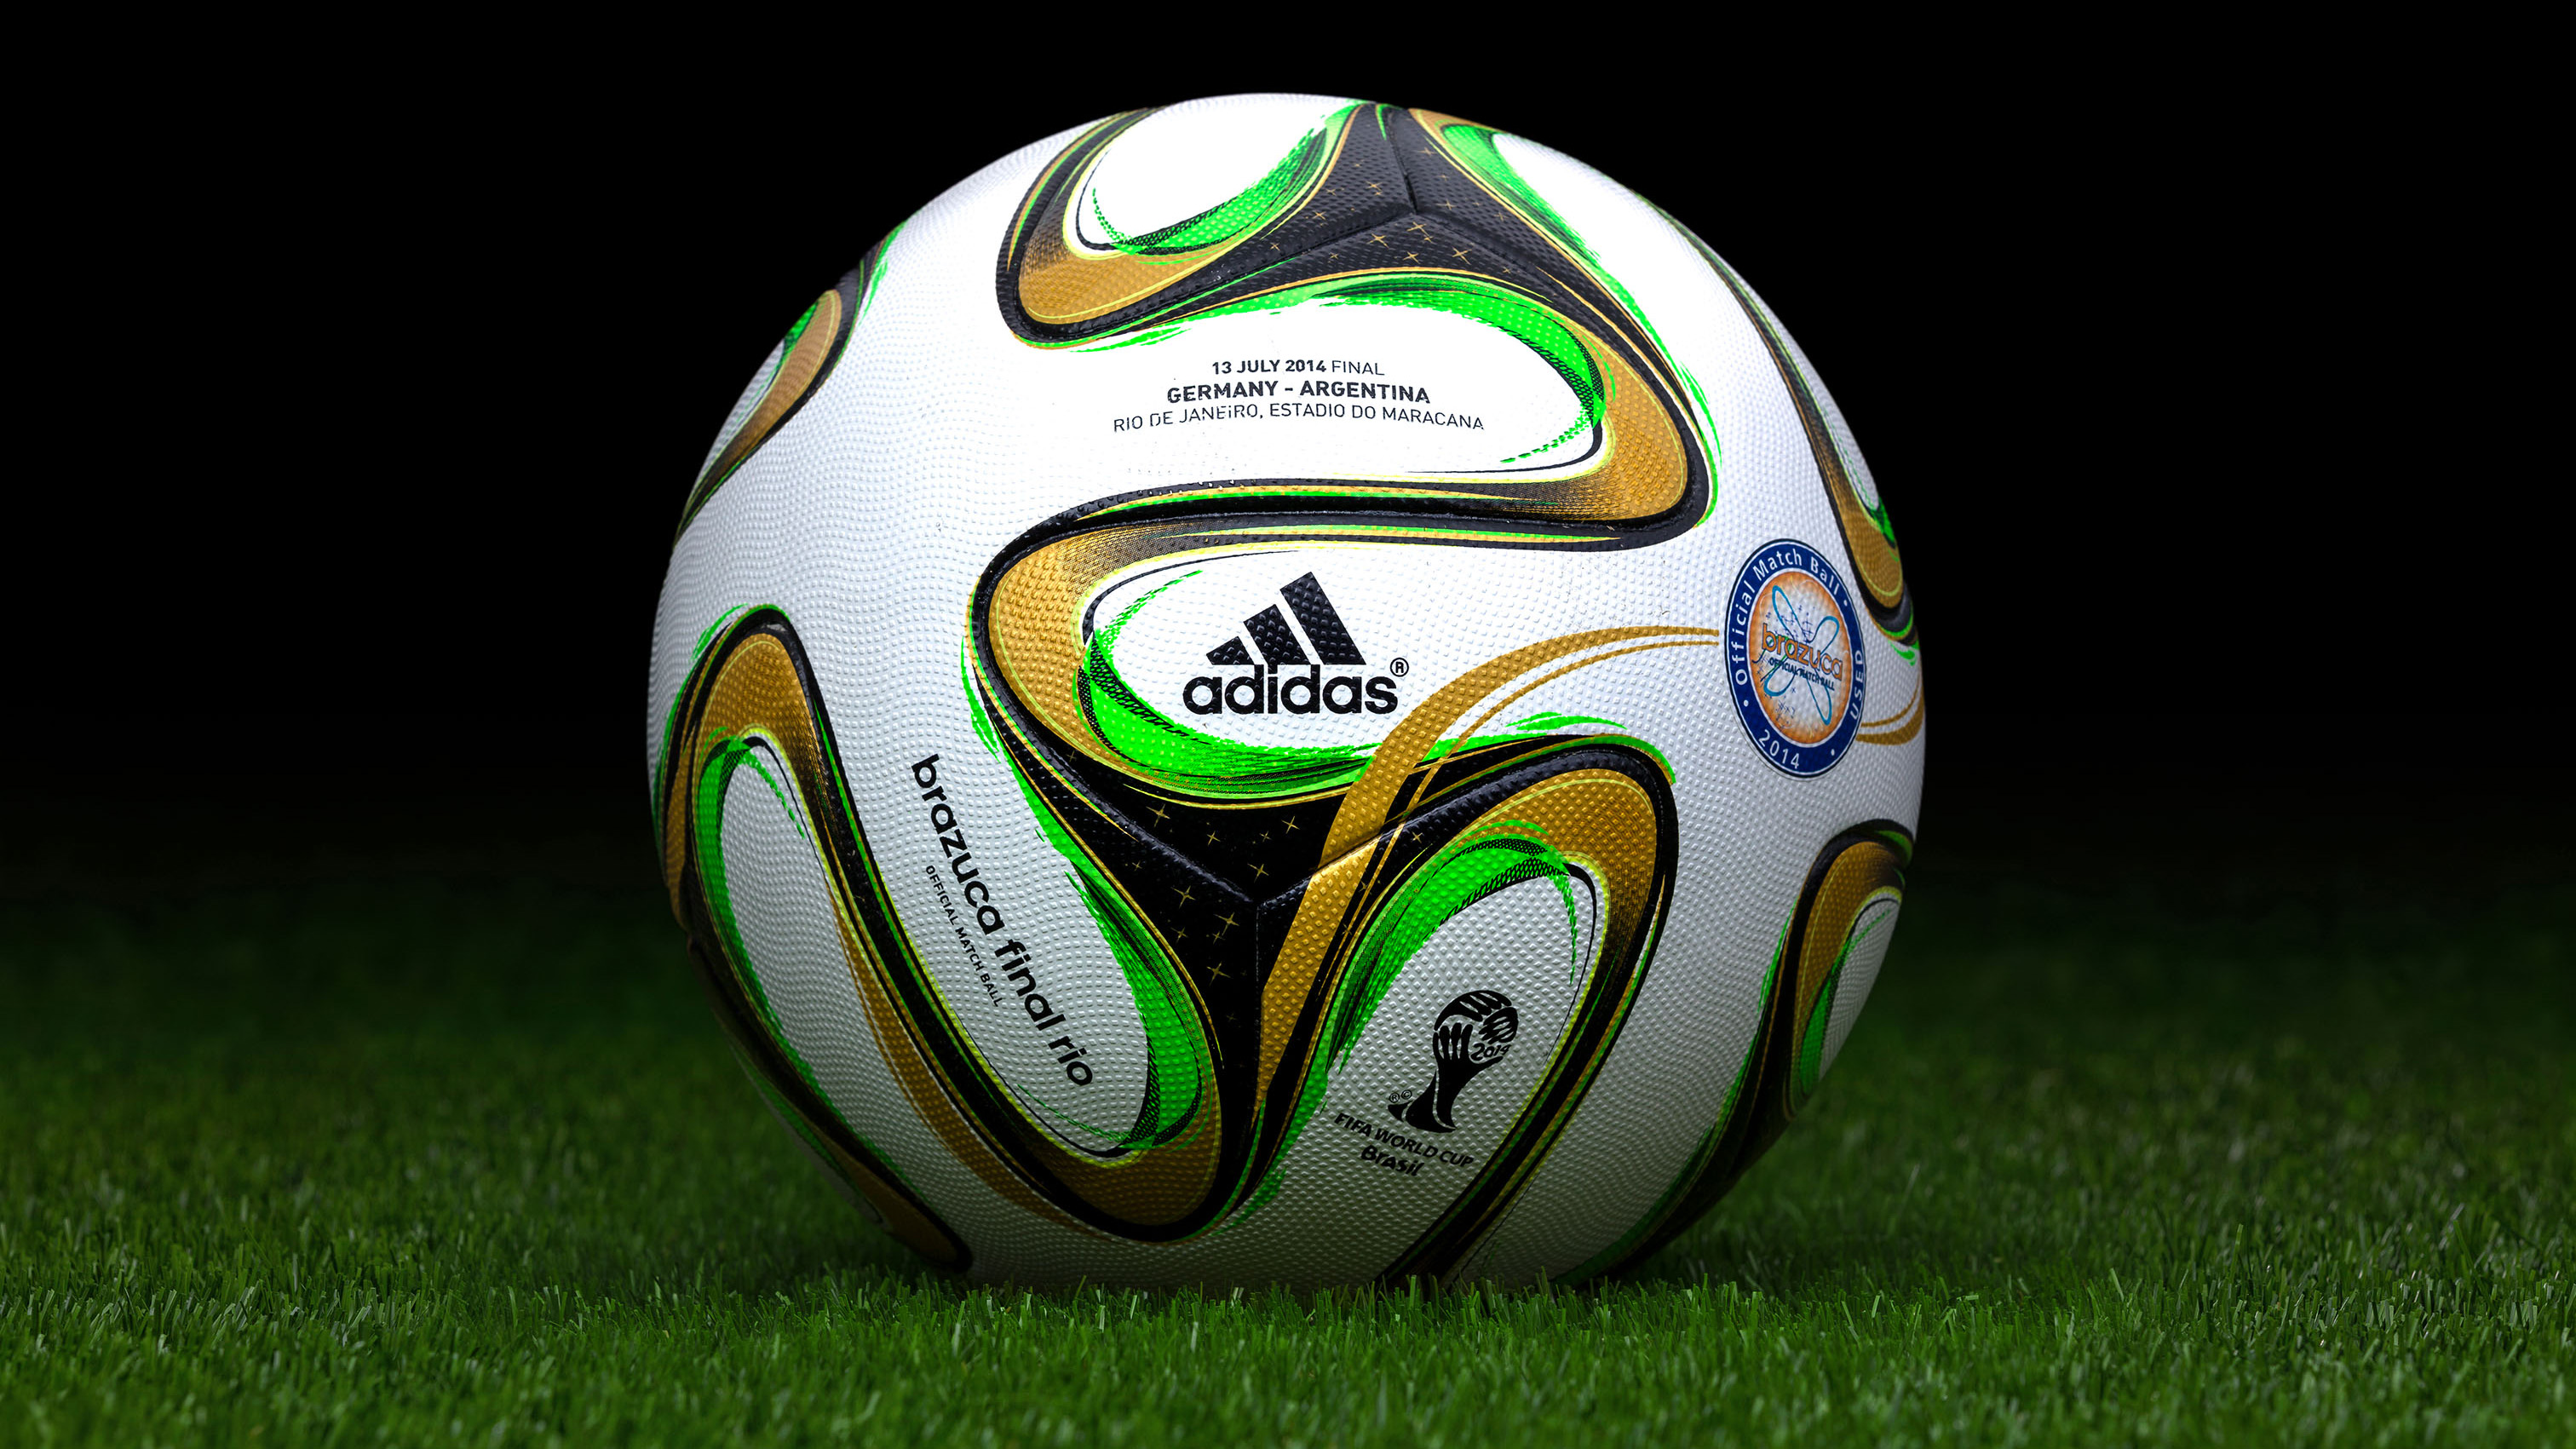 Adidas Brazuca Final Rio Official Match Ball Review - video